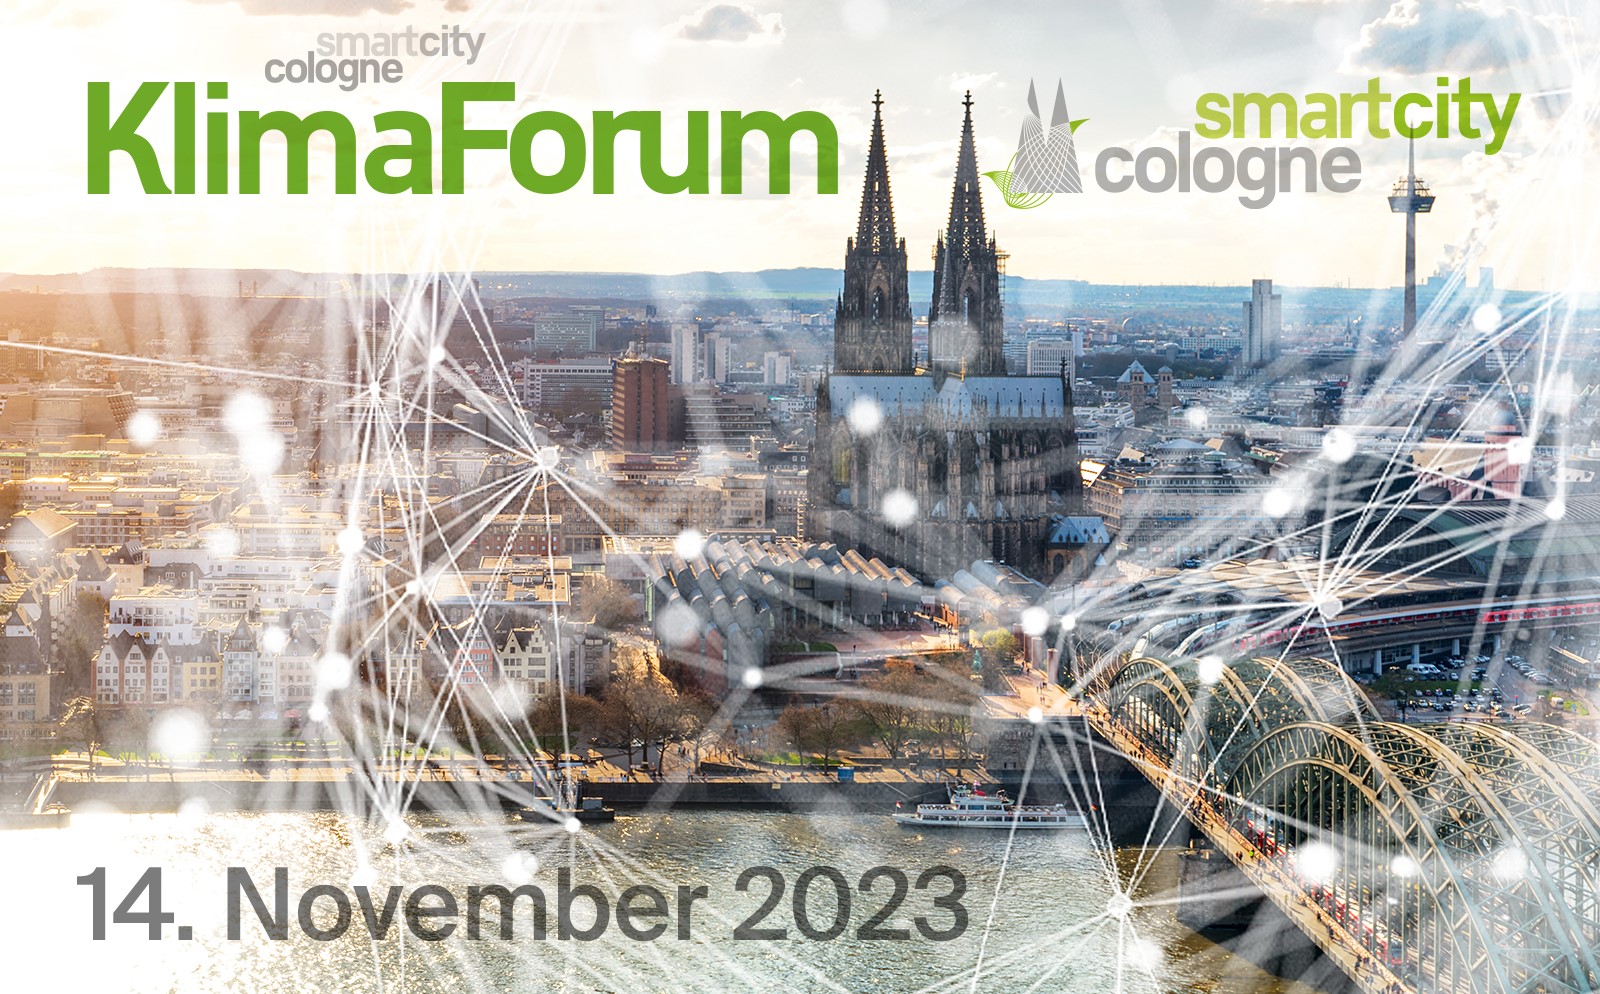 Panoramablick über Köln mit dem Text: SmartCity Cologne KlimaForum, 14. November 2013